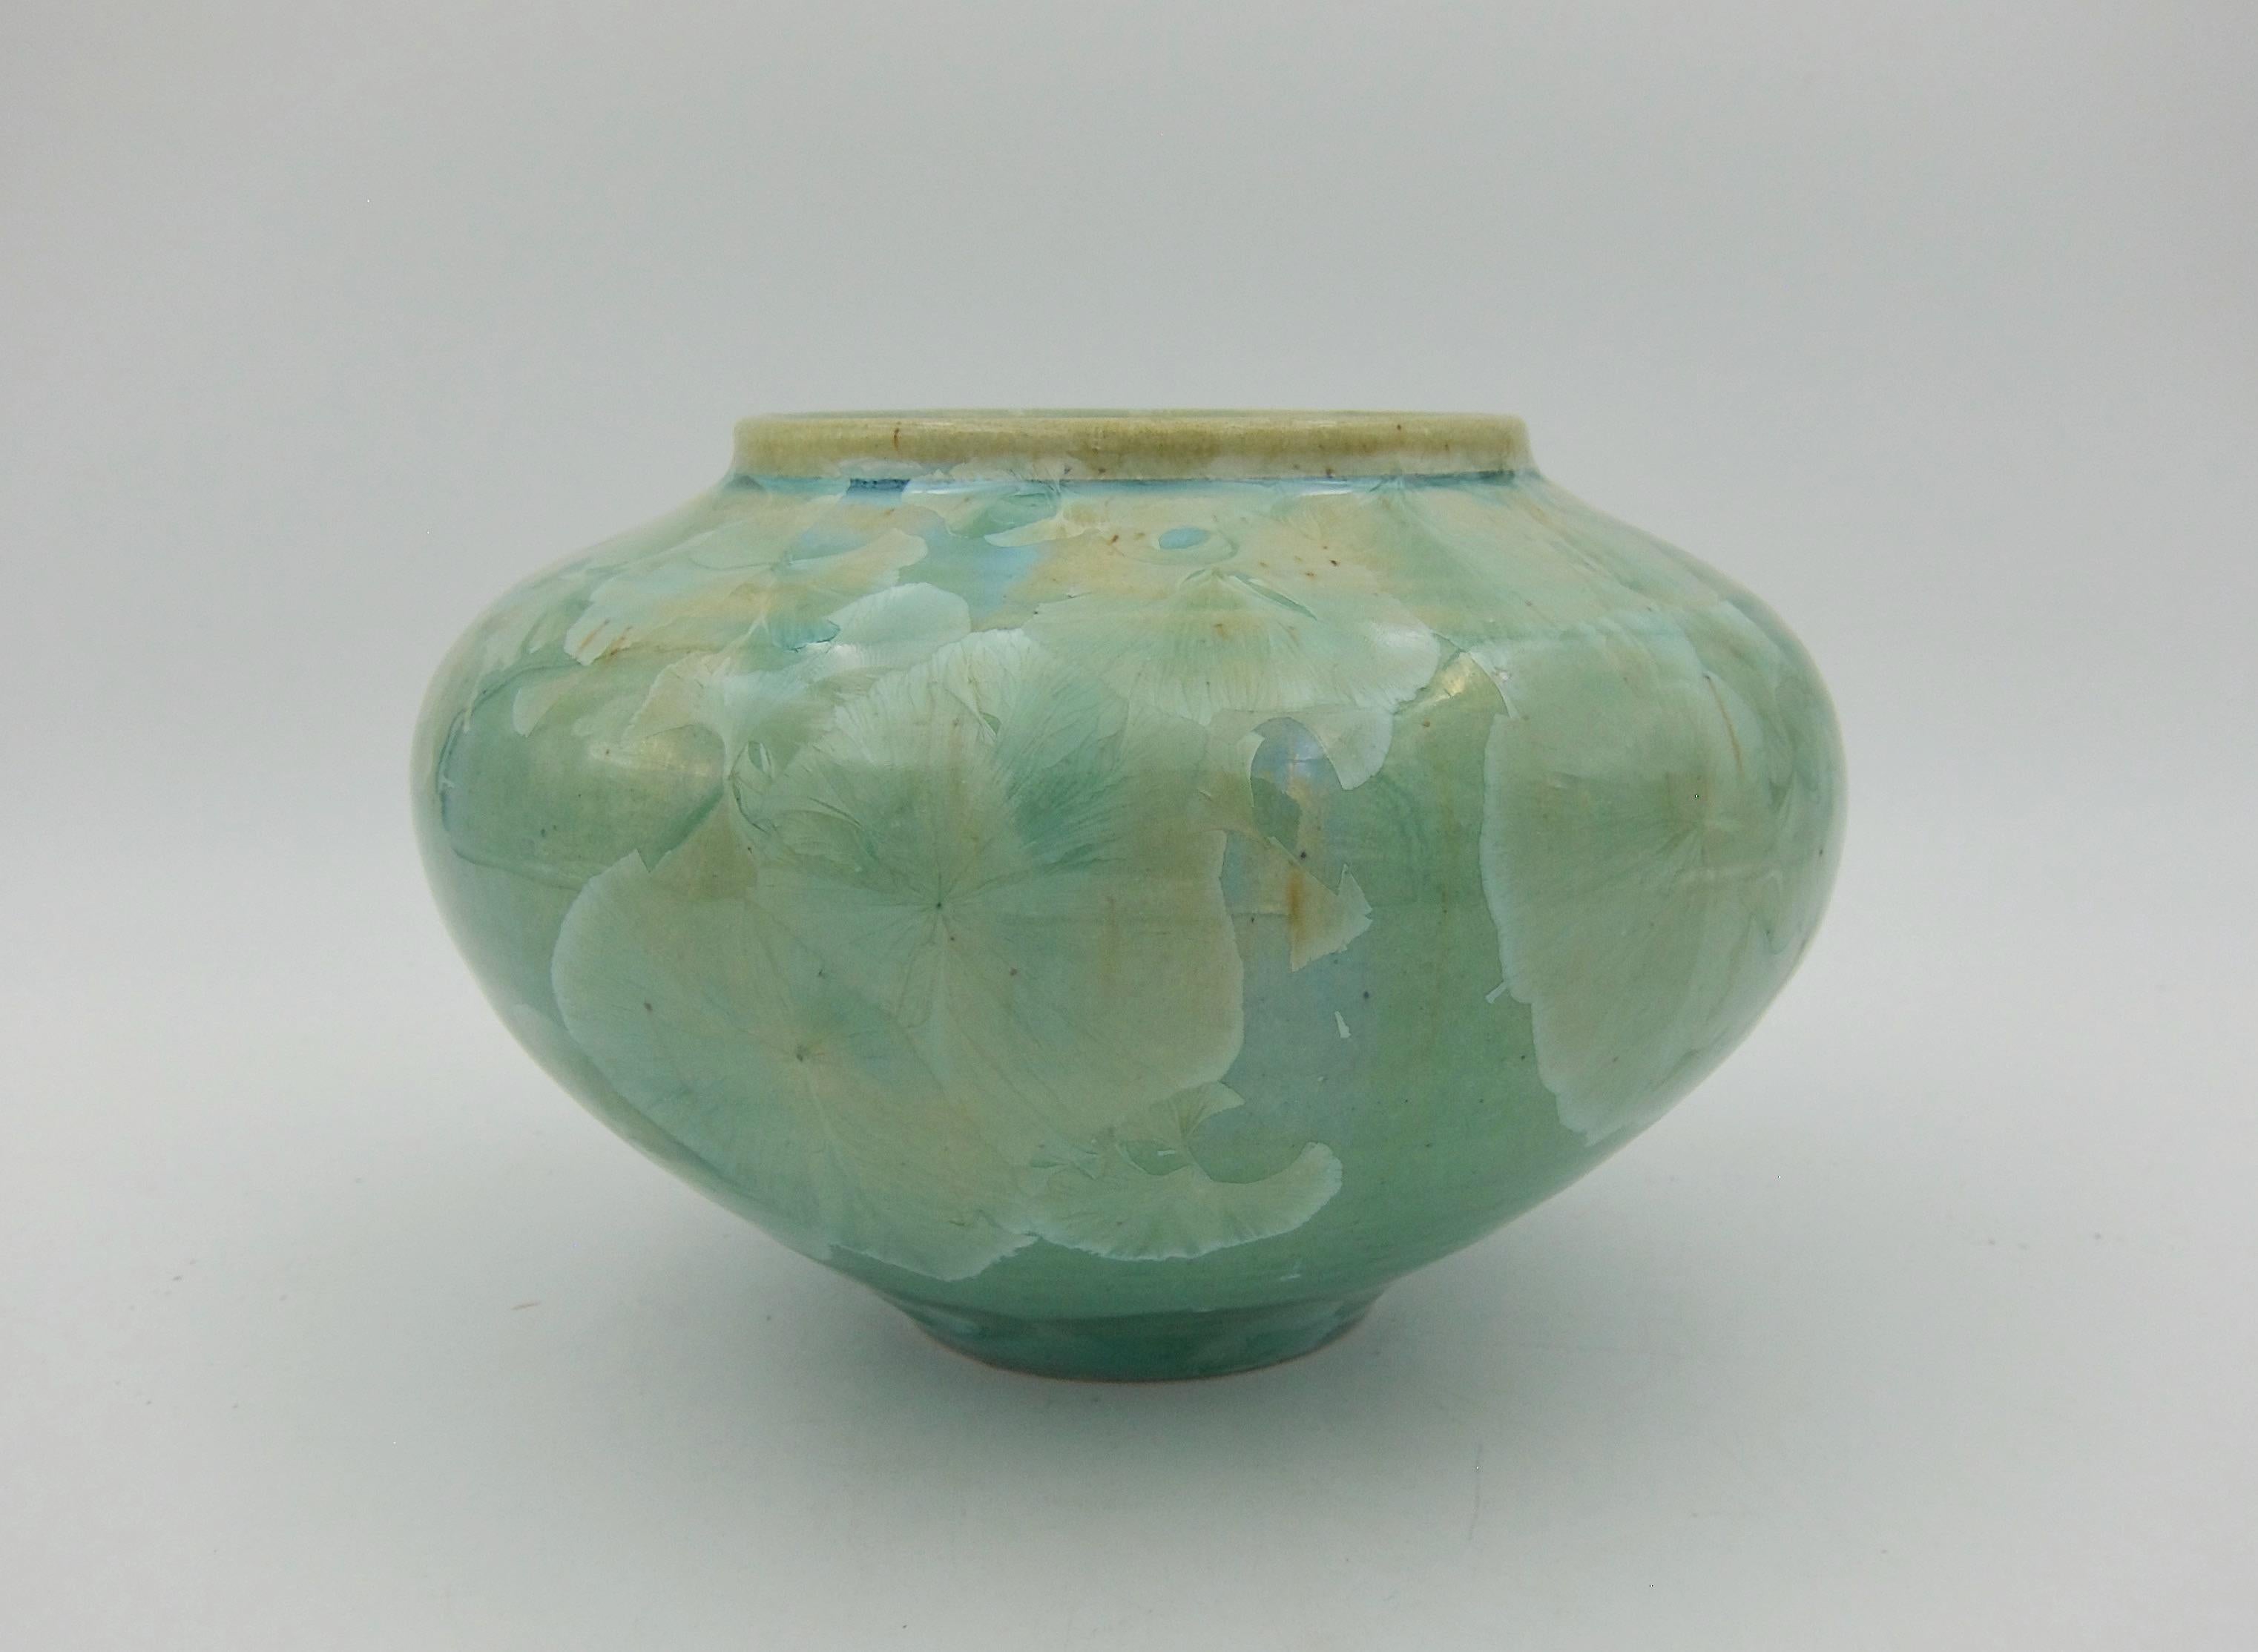 American Vintage Buckingham Art Pottery Vase with Green Crystalline Glaze, 1994